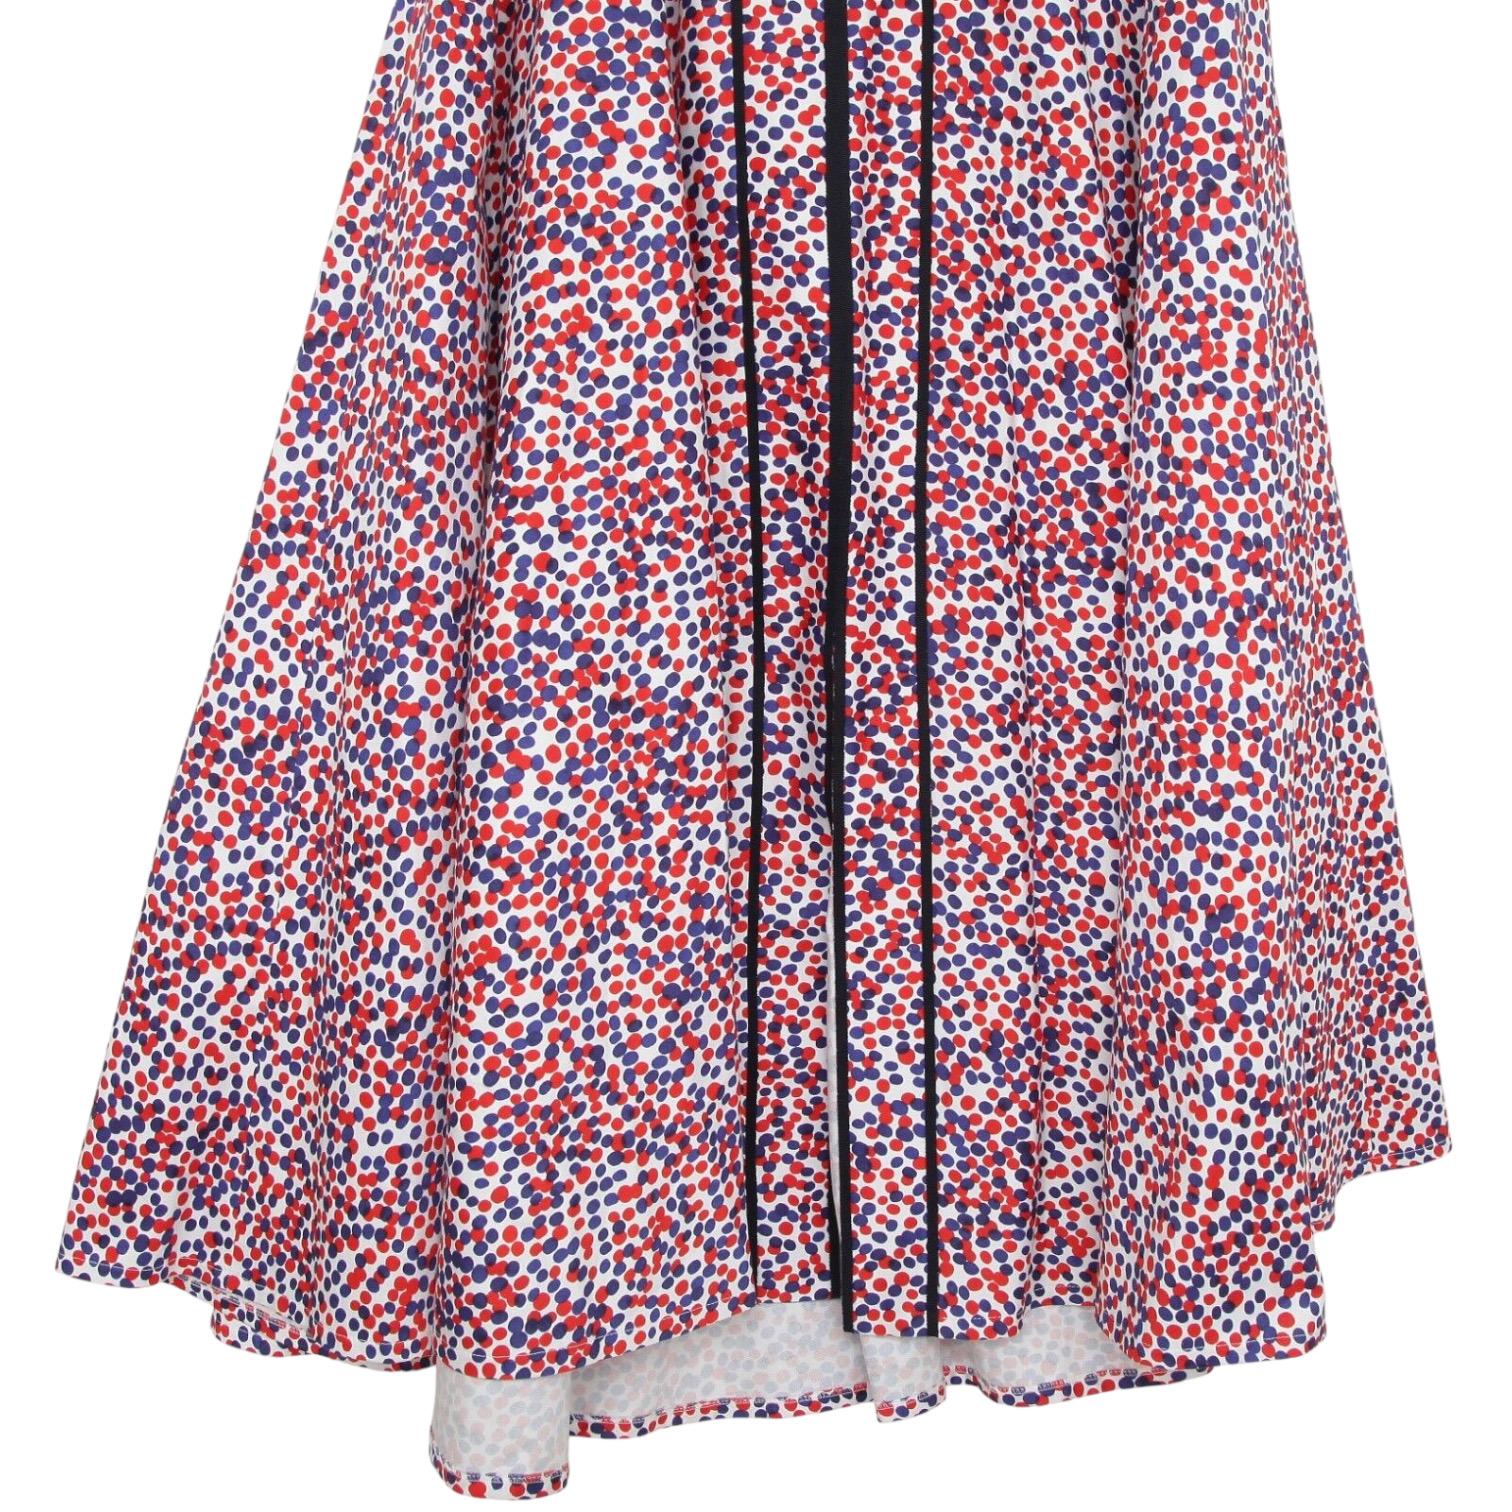 Gray CAROLINA HERRERA Skirt Umbrella Polka Dot Full Maxi Cotton Blend Dress Sz 8 For Sale